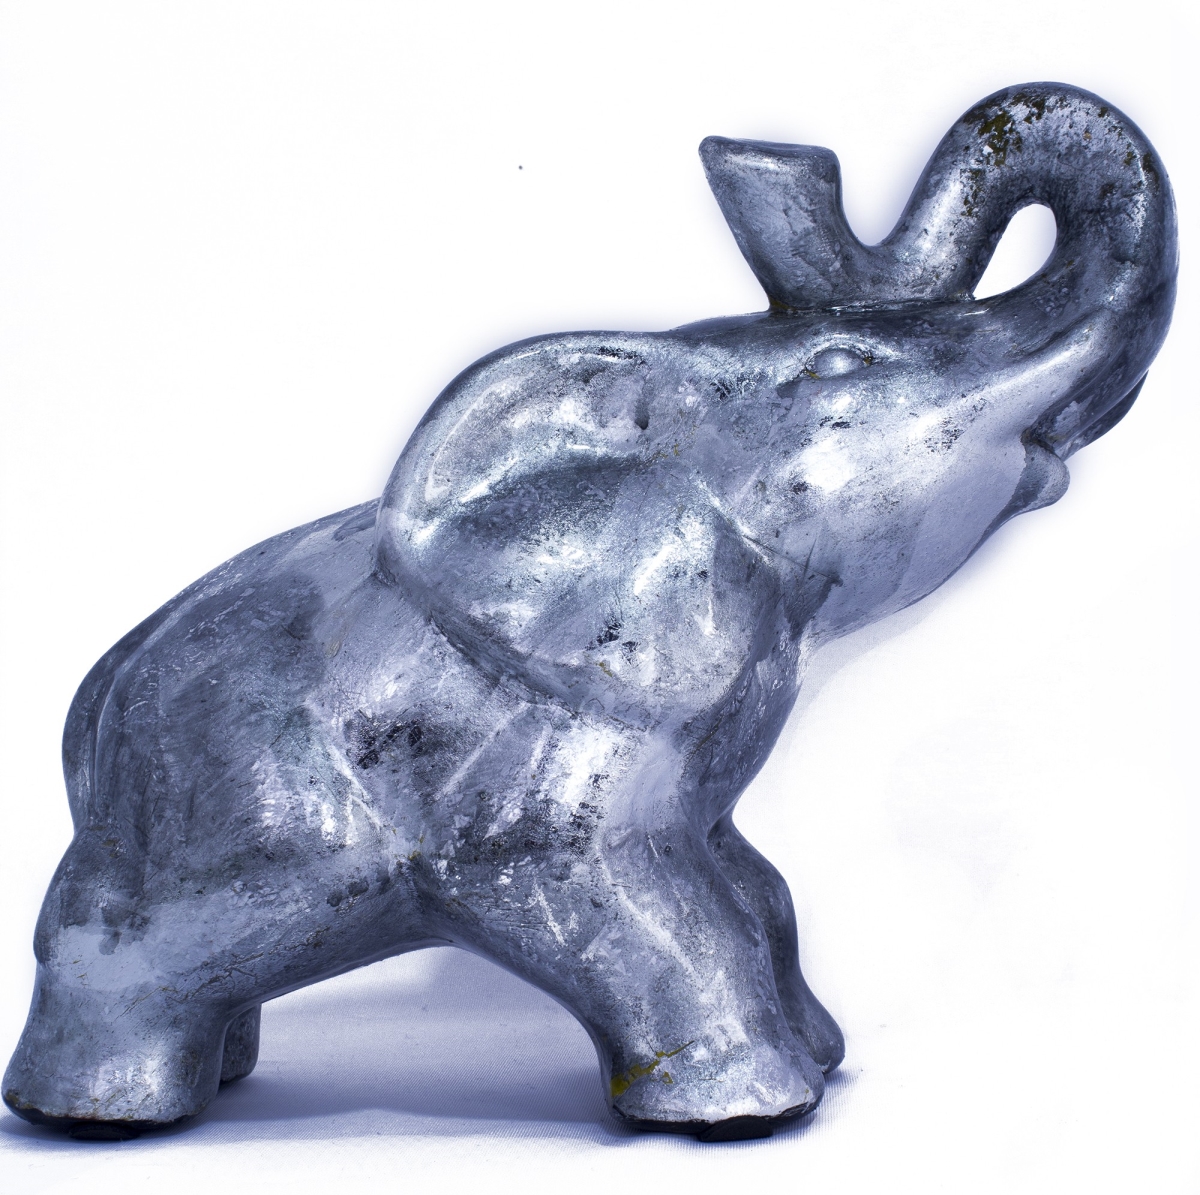 W071352a-b85 10 In. India Decorative Ceramic Elephant, Silver